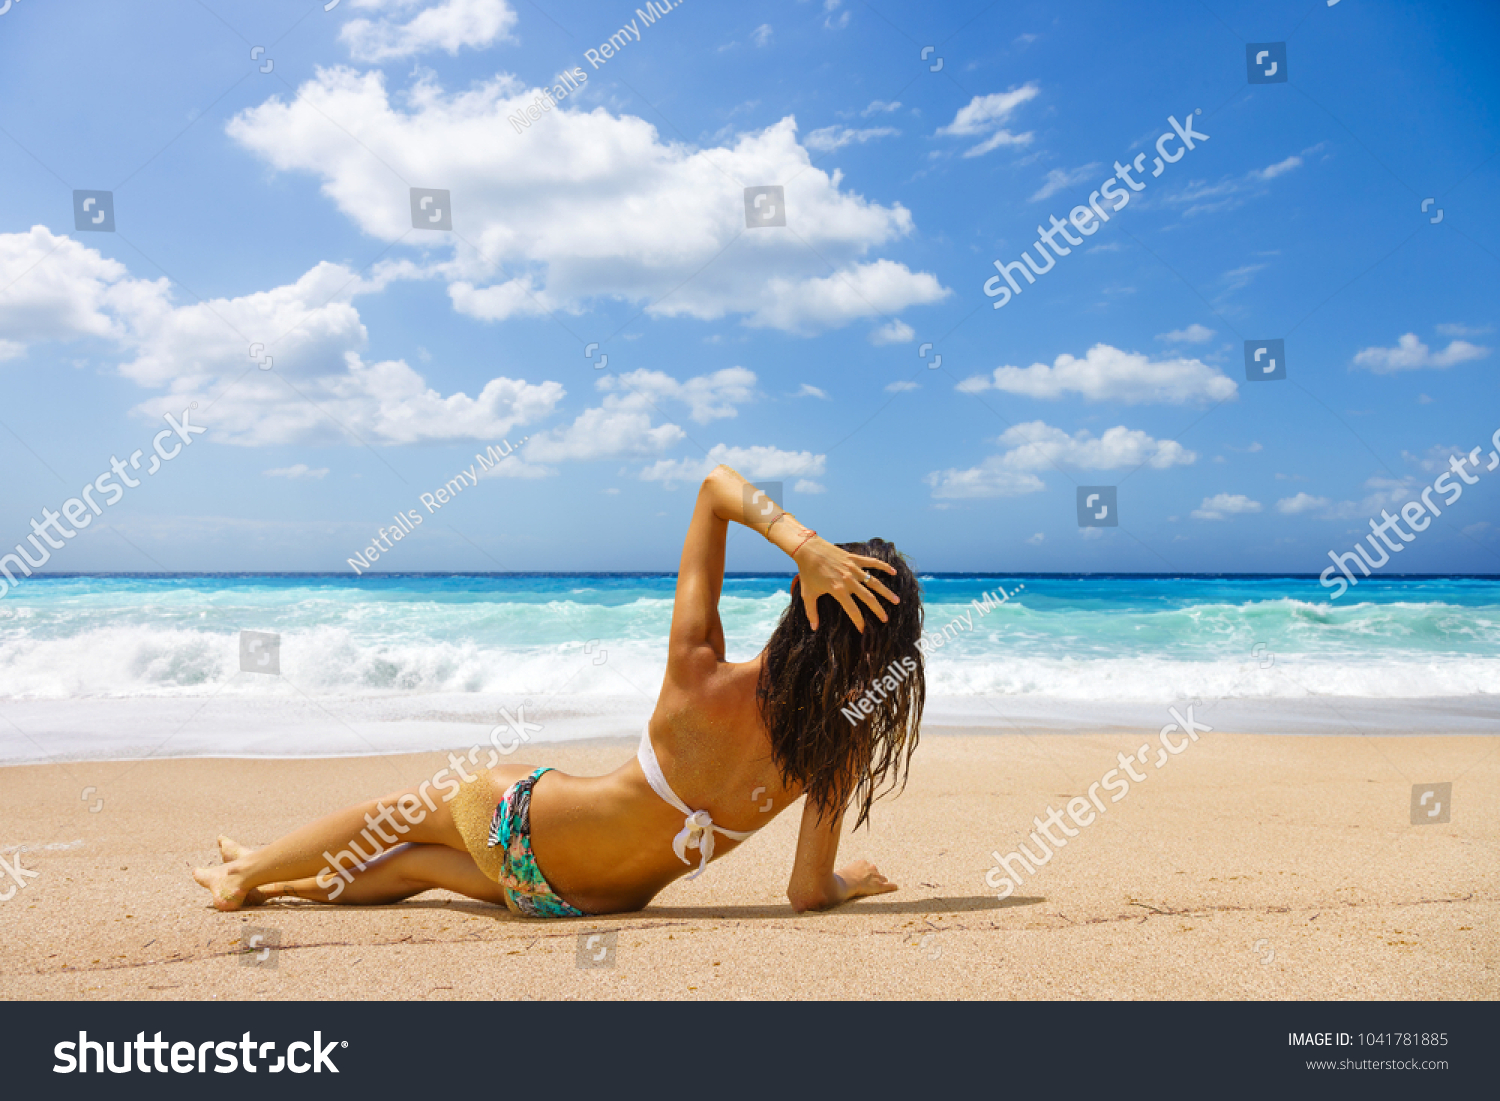 Woman suntanning at the beach #1041781885